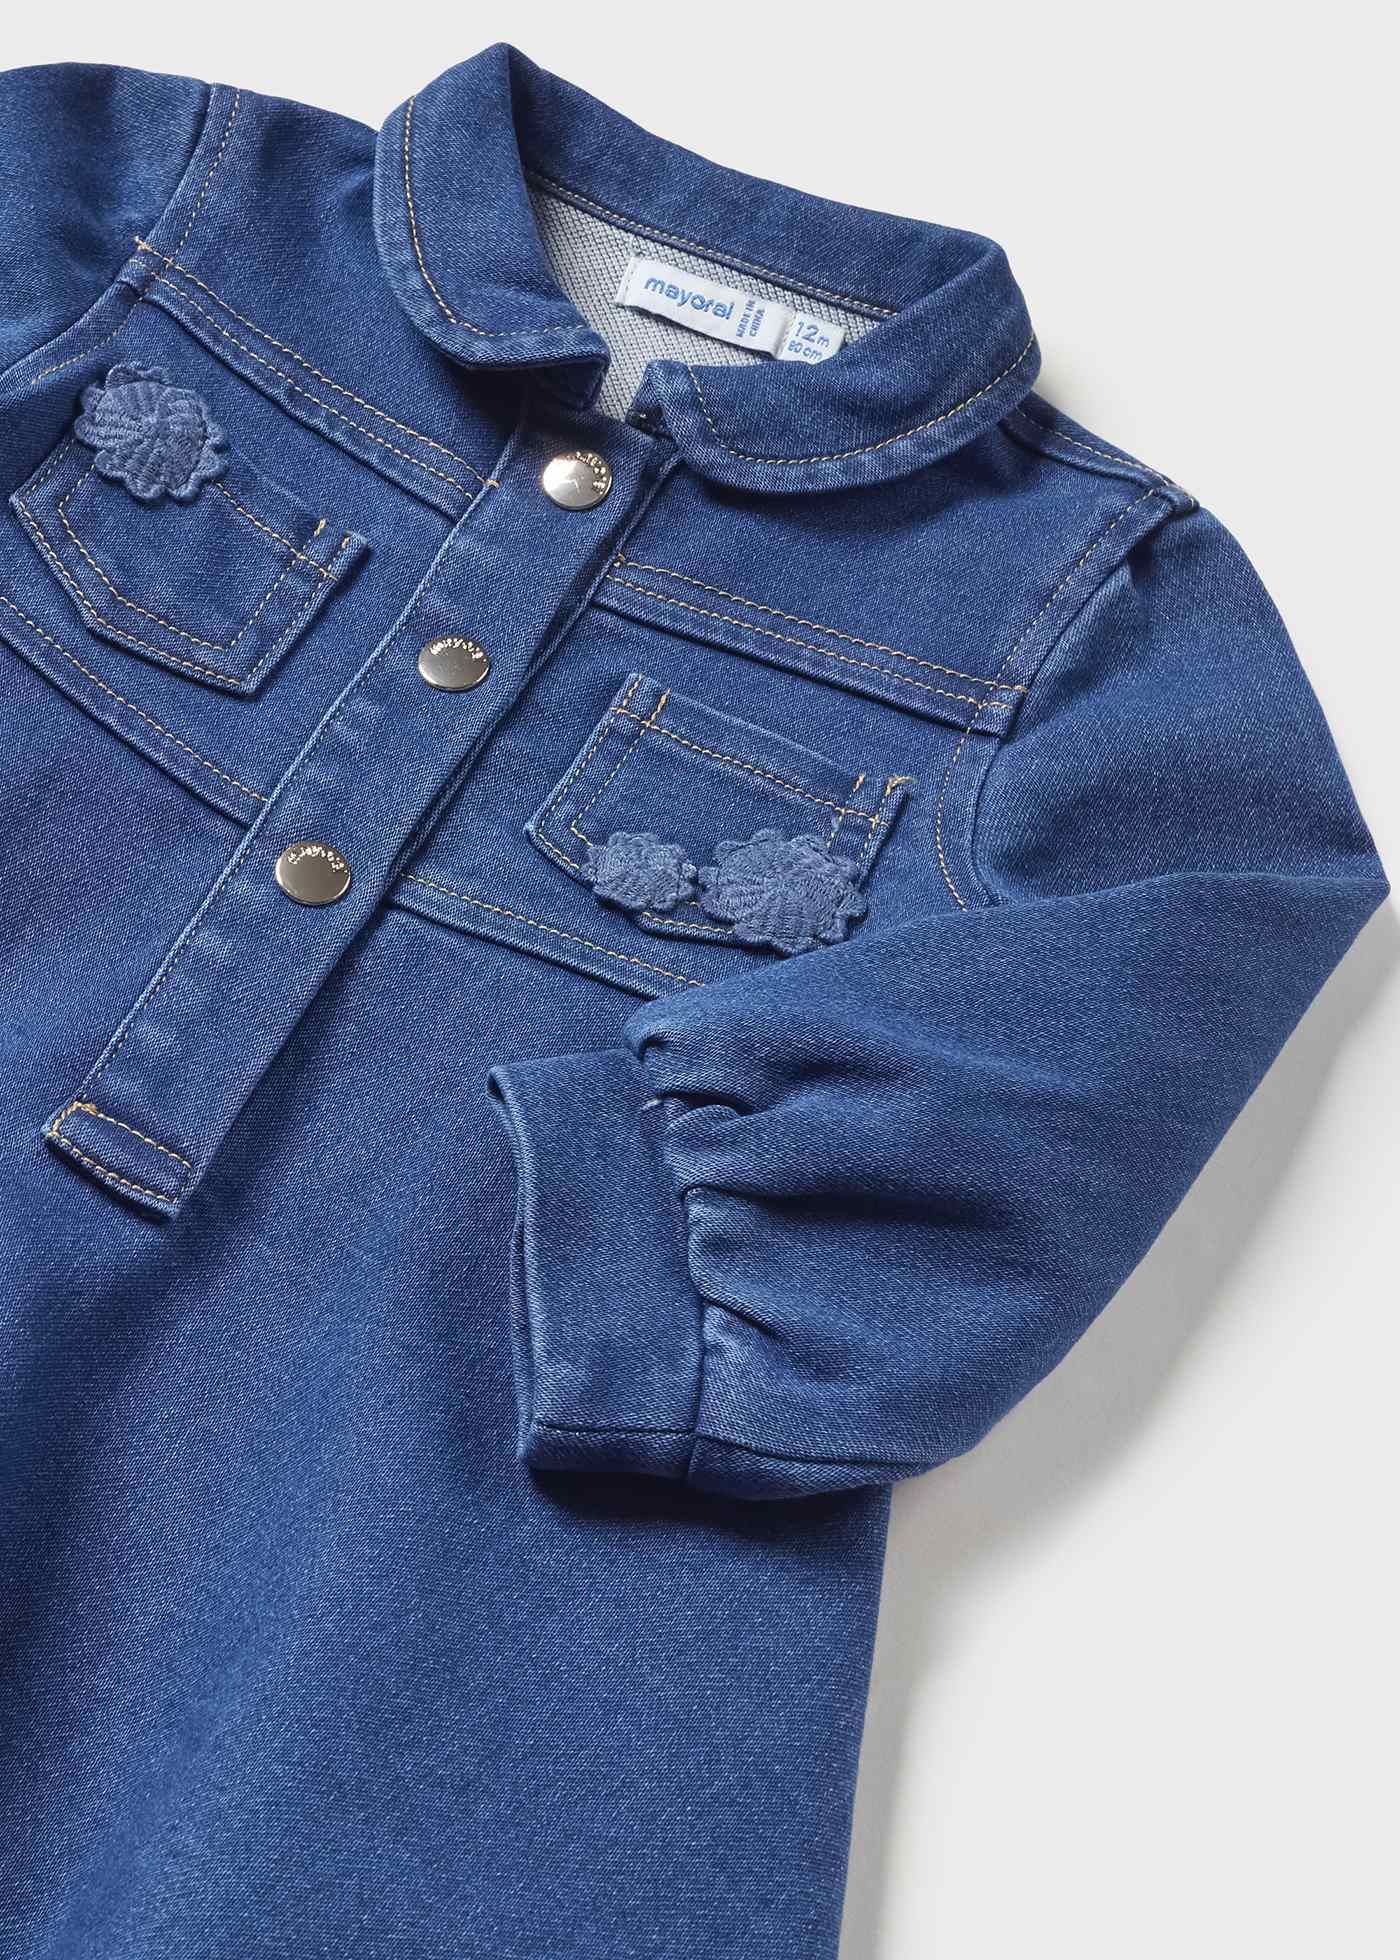 Chaps Baby Girl Toddler Overalls Dress Size 24M Denim Blue Jean Dress  Adjutsable | eBay